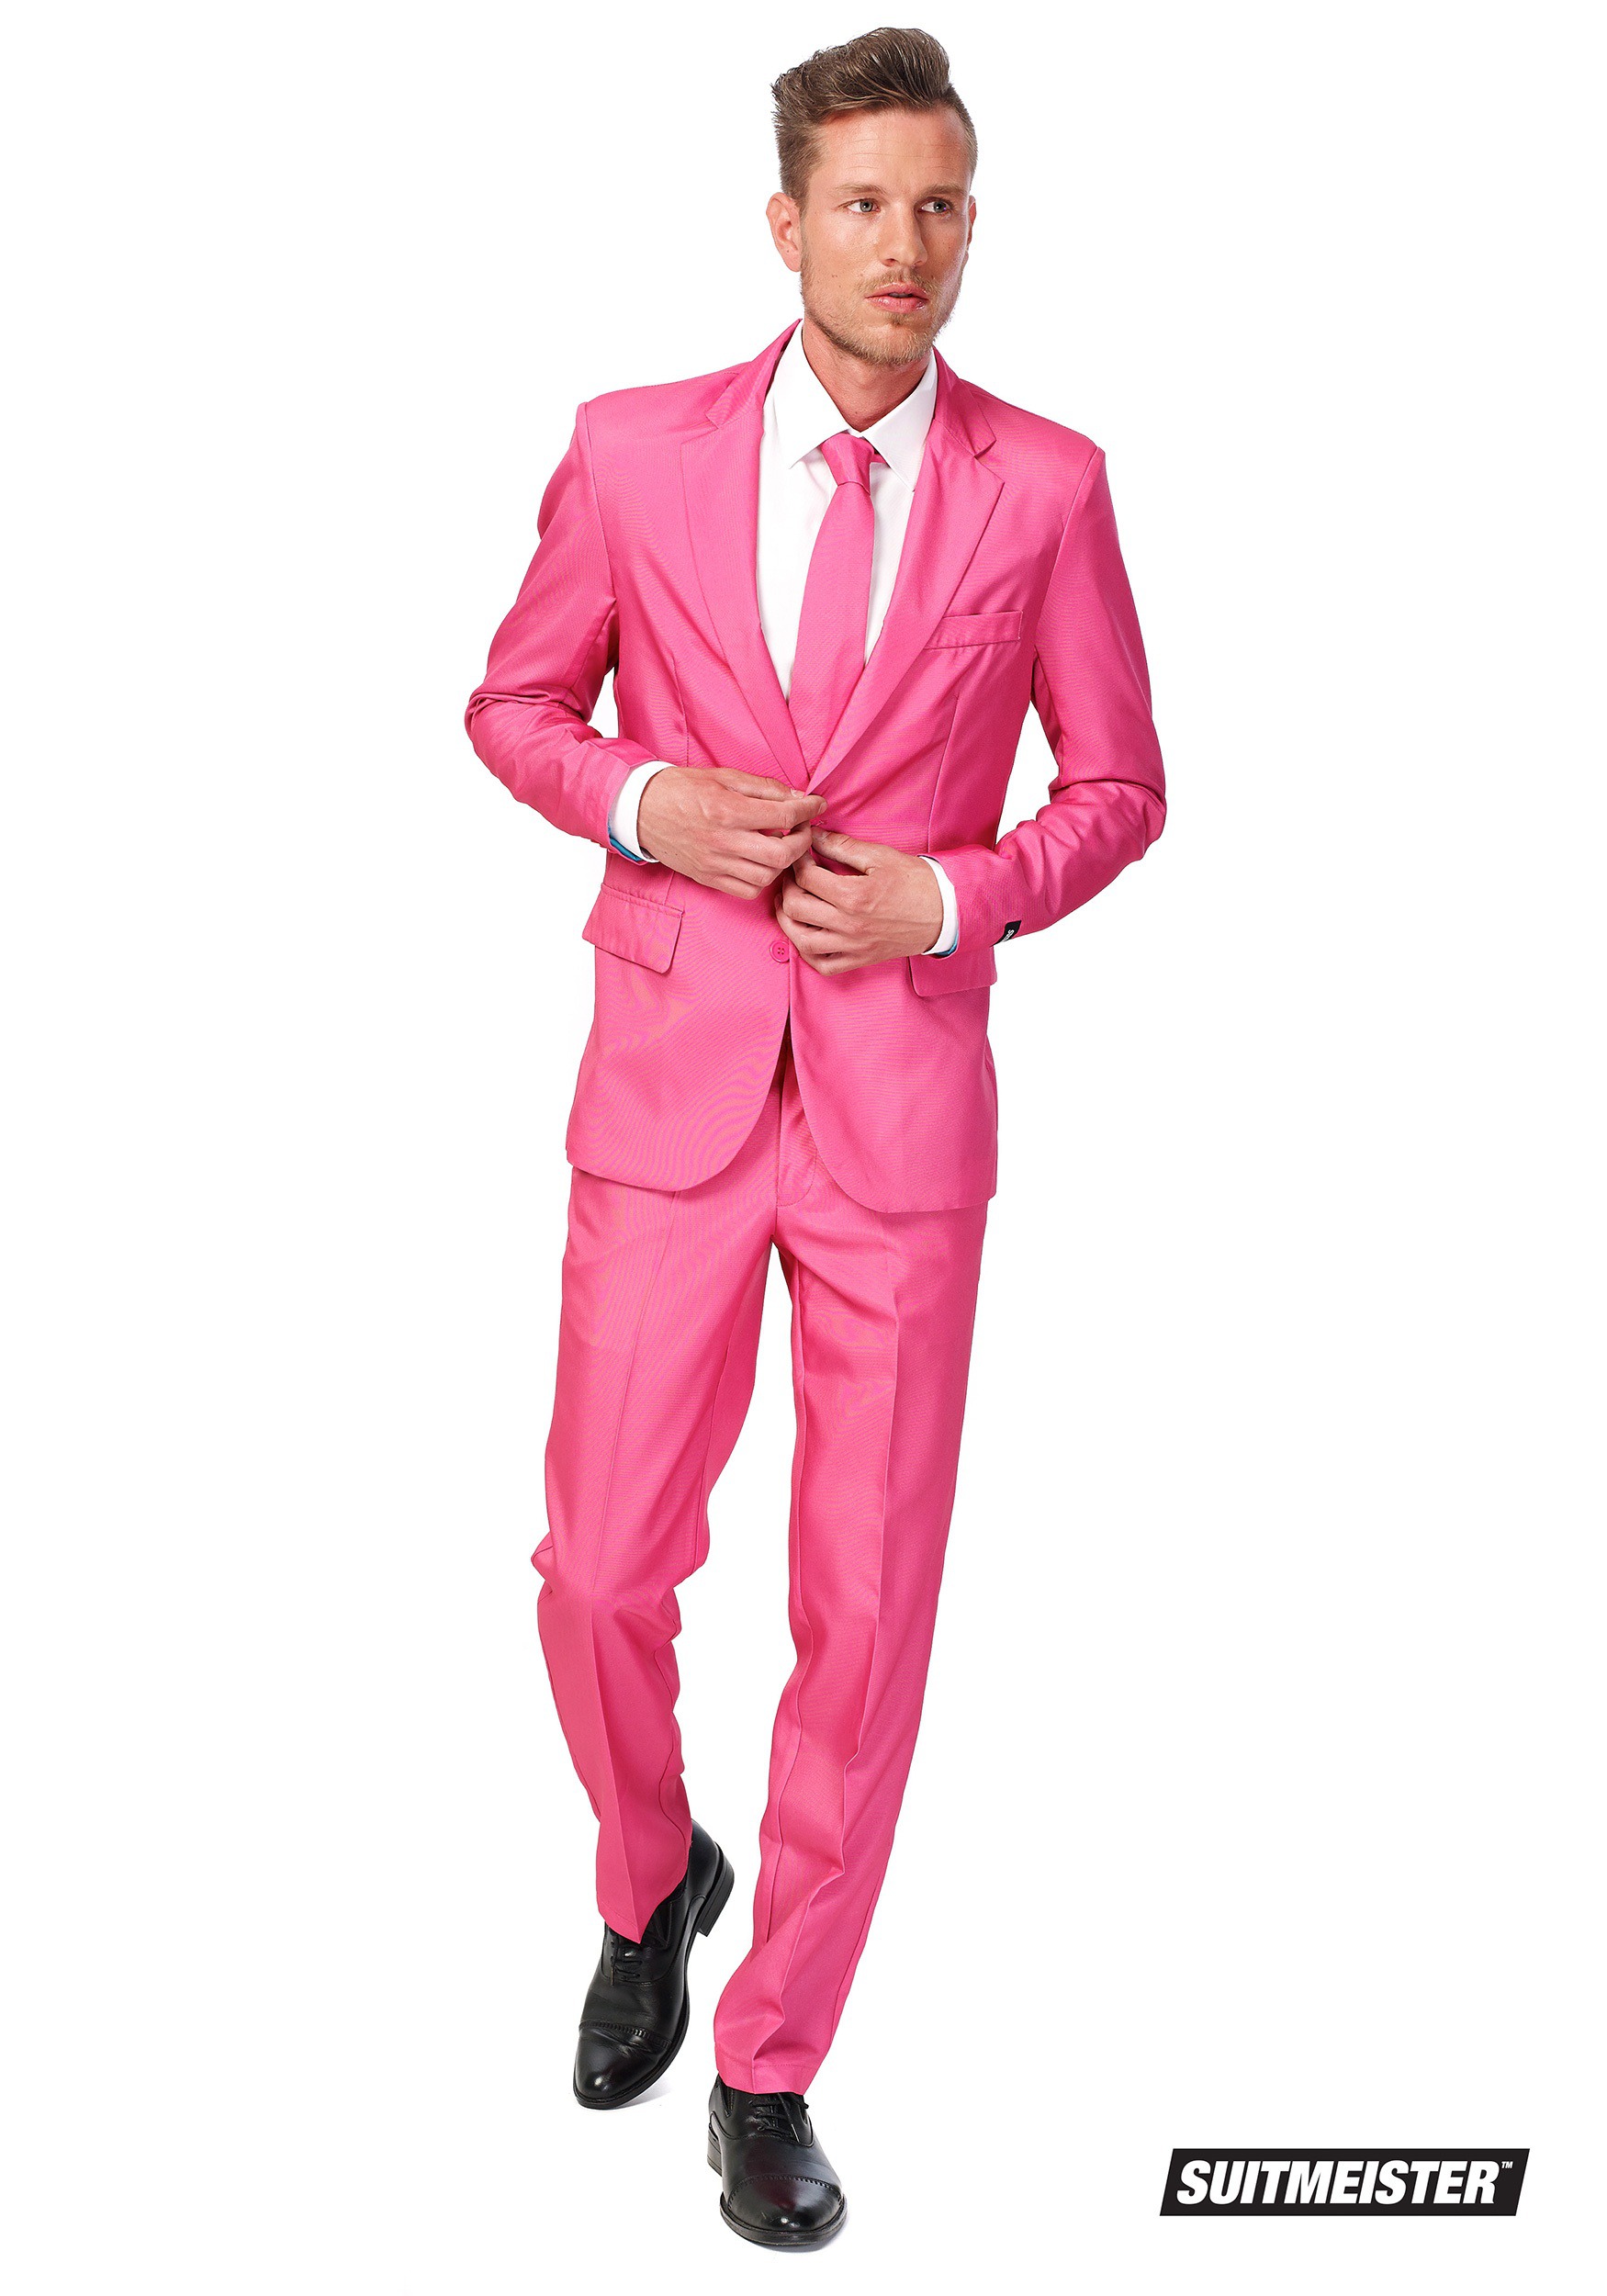 Men’s SuitMeister Basic Pink Suit Costume